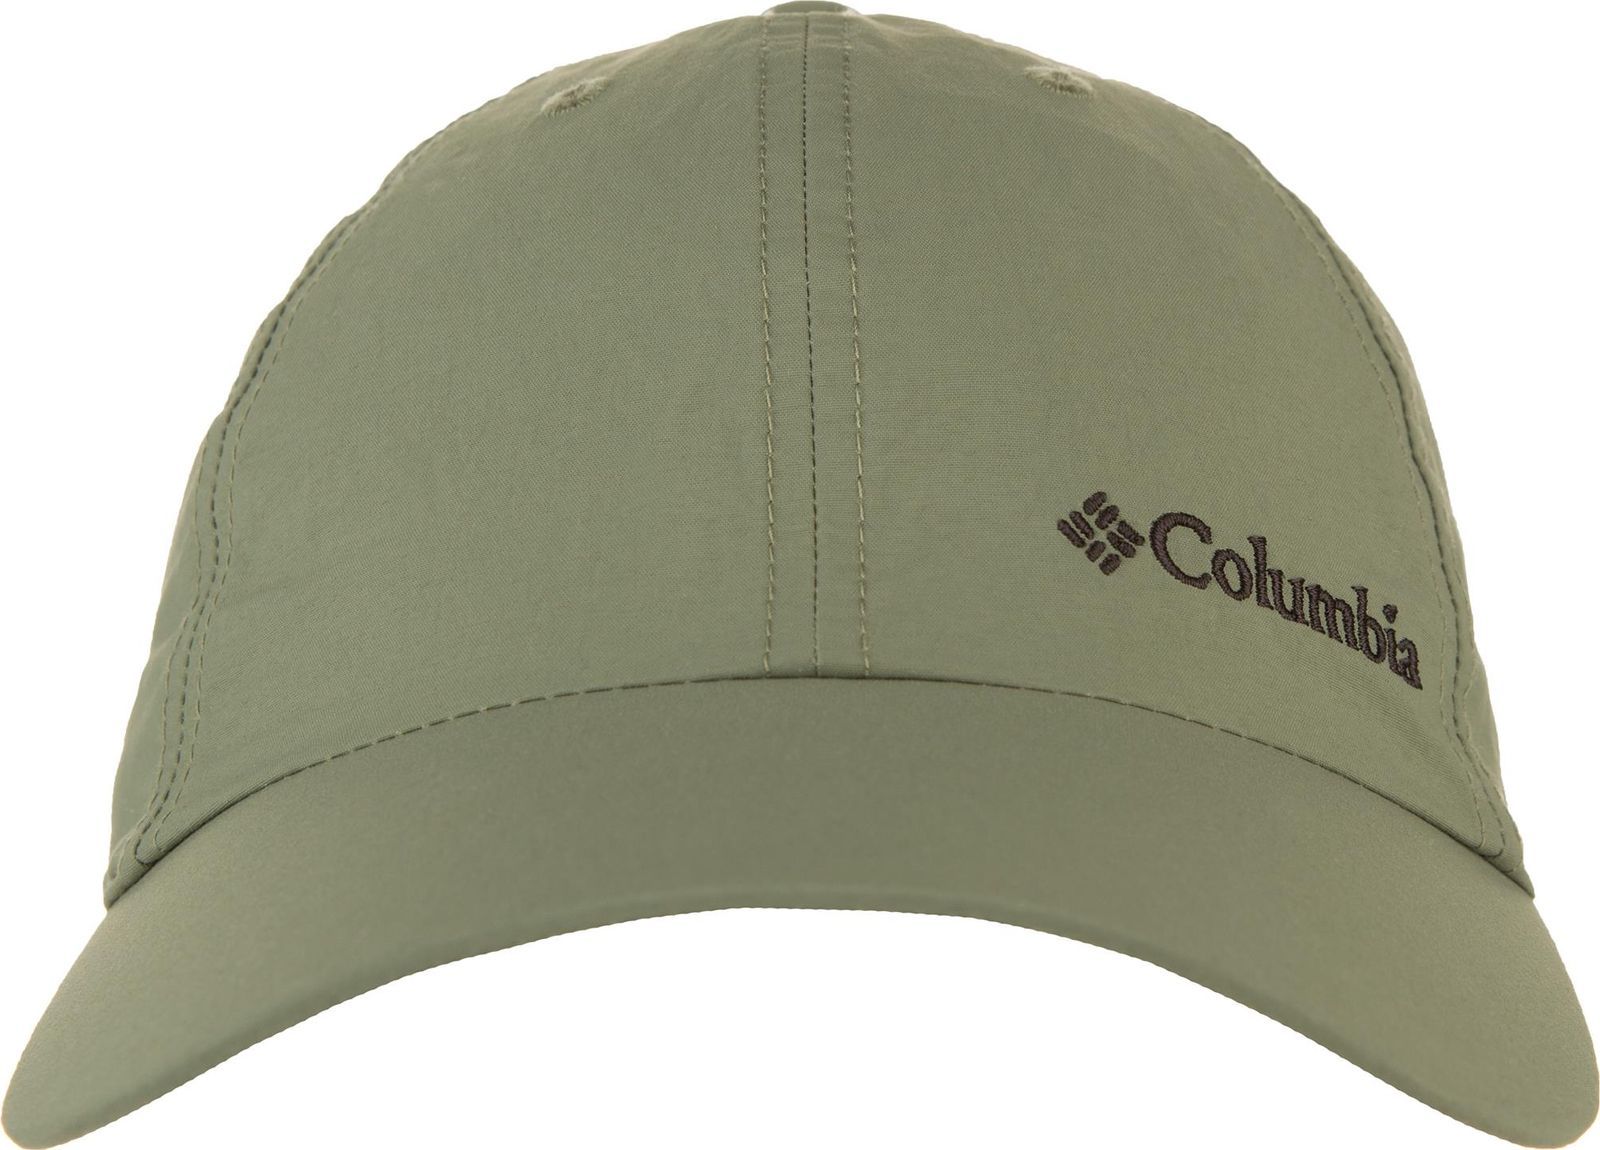  Columbia Tech Shade II Hat, : . 1819641-316.  